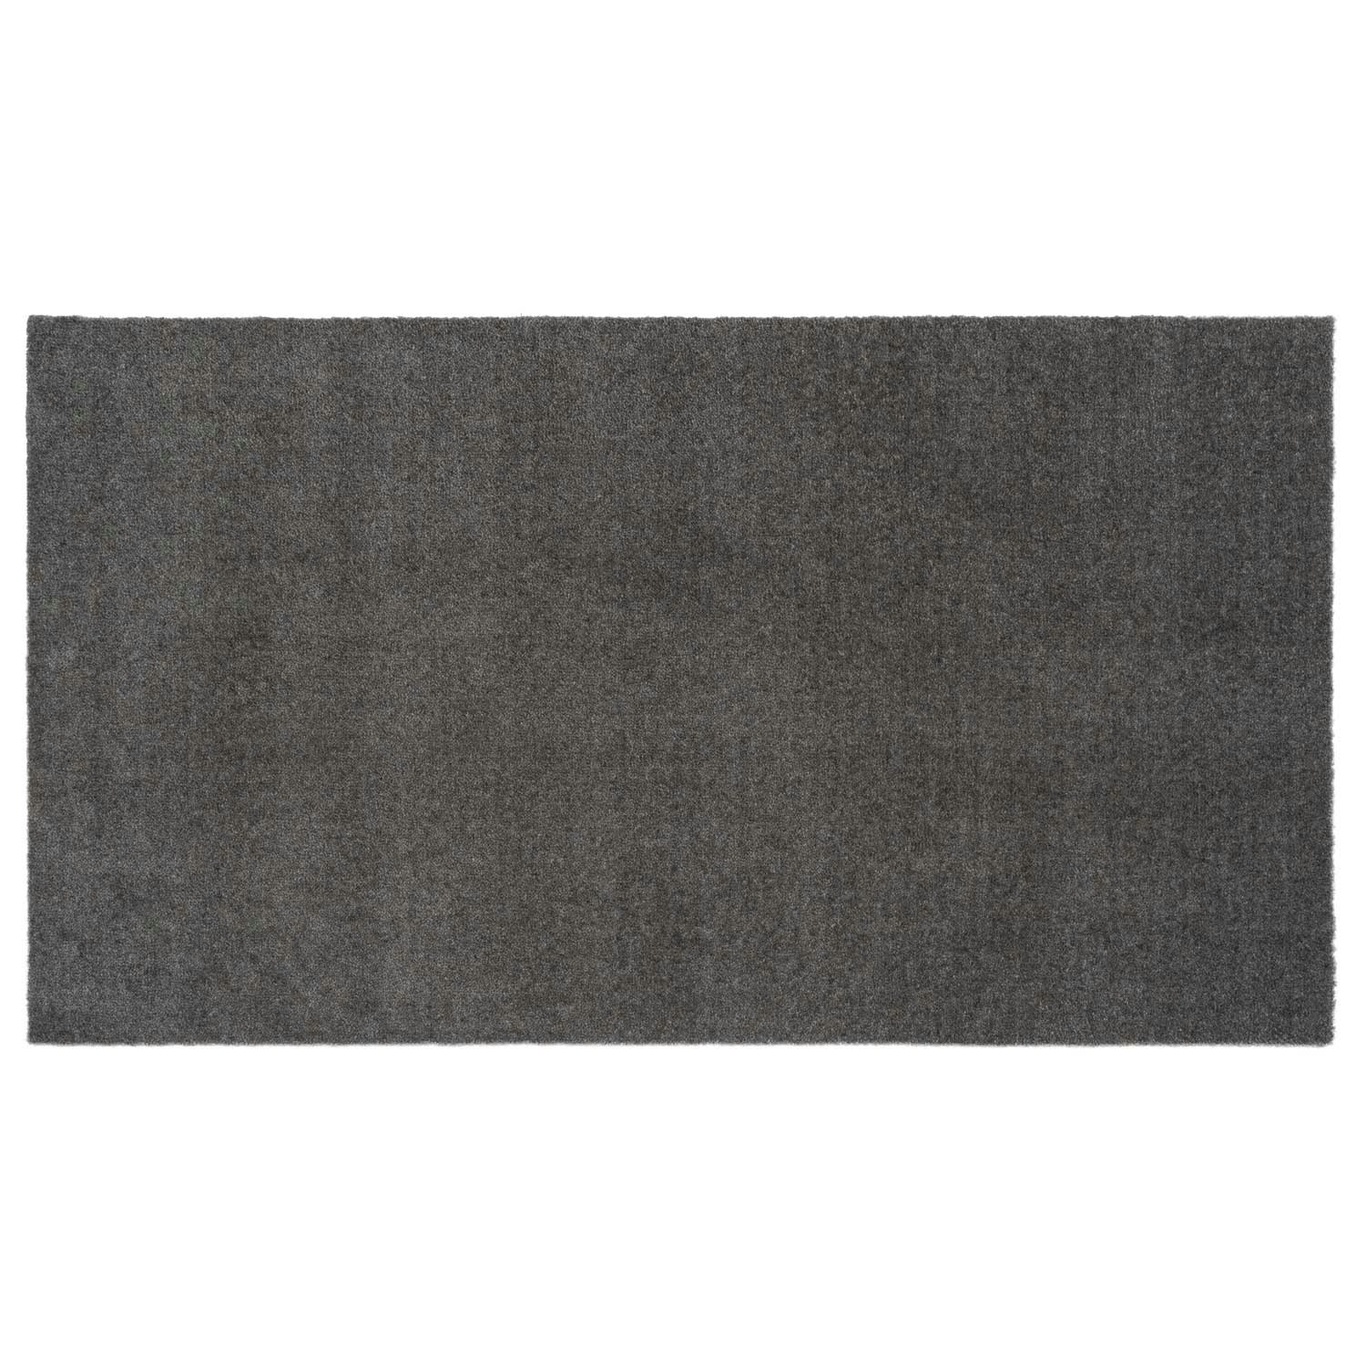 Unicolor Ovimatto Teräksenharmaa, 67x120 cm